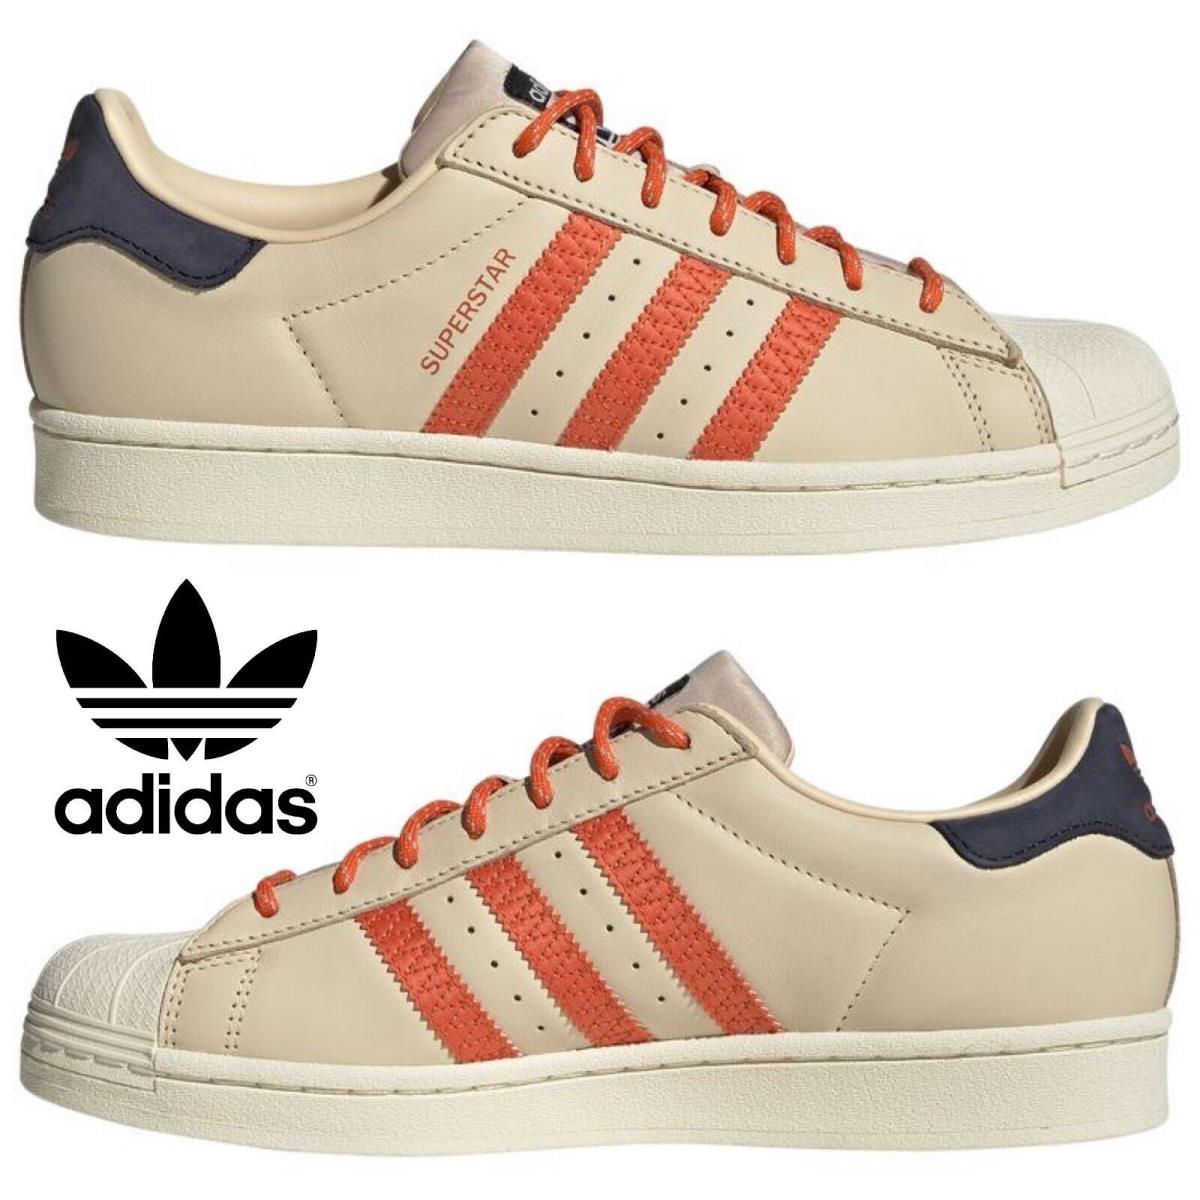 Adidas Originals Superstar Men`s Sneakers Comfort Sport Casual Shoes Sand Beige - Beige , Sand Strata/Magic Beige/Legend Ink Manufacturer